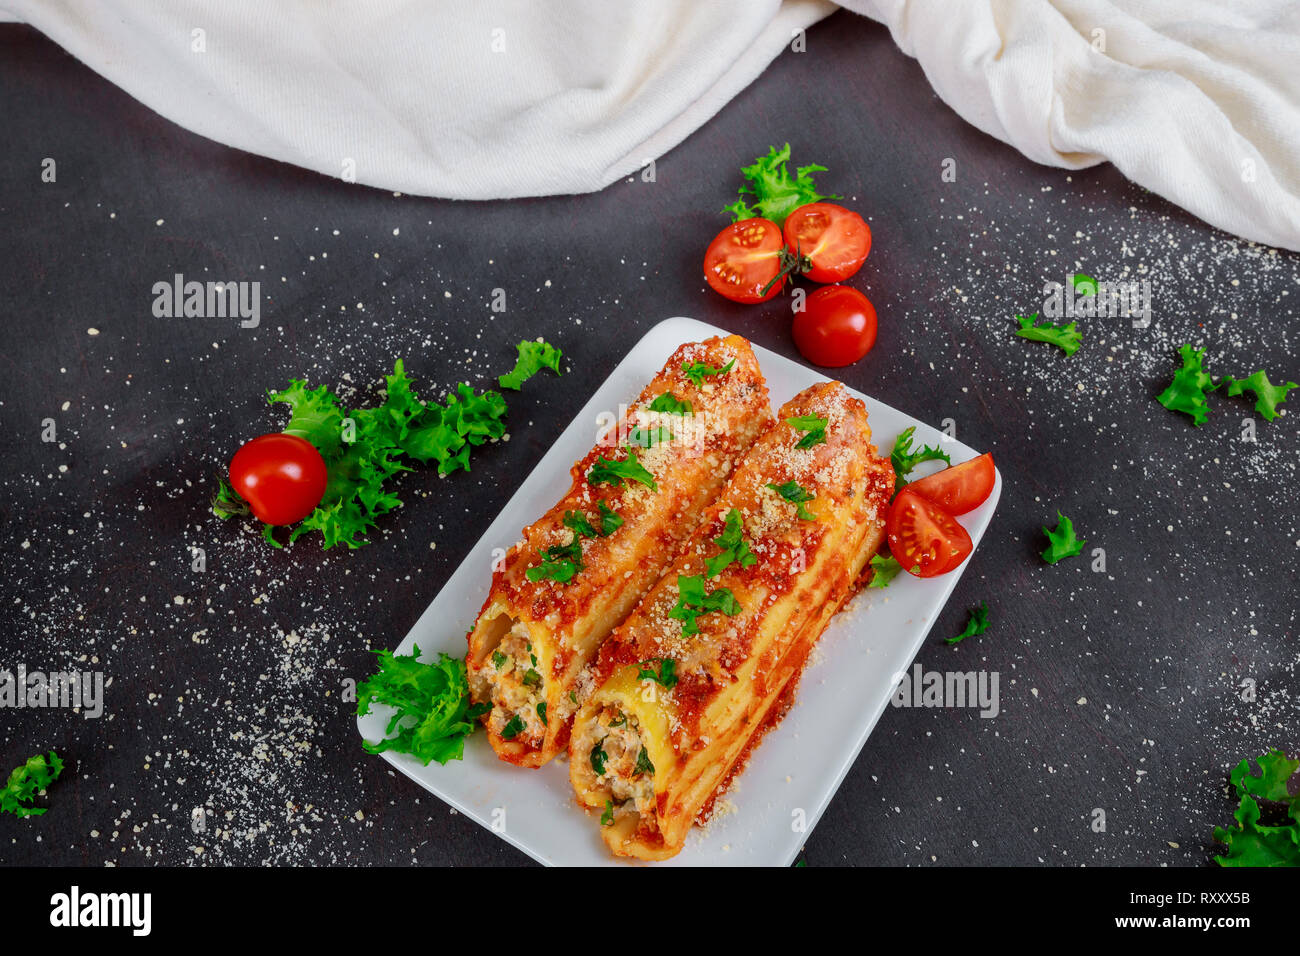 Rondelli tradicional italiana canelones pasta con salsa de tomate sobre fondo rústico Foto de stock